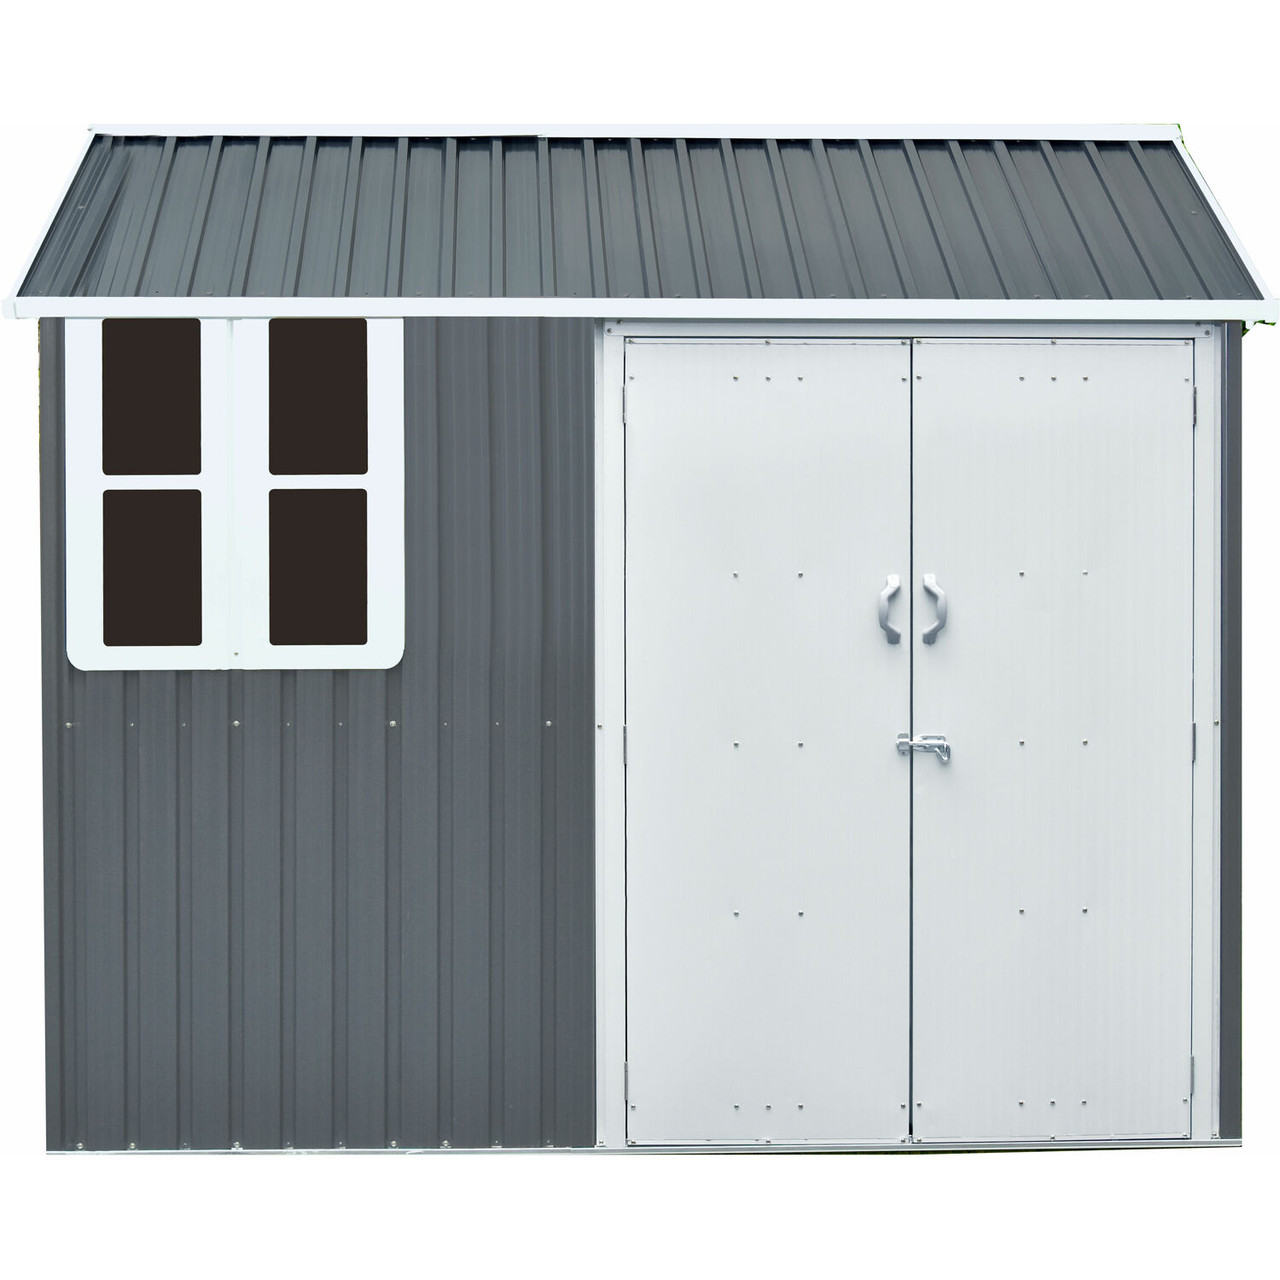 Fornorth Tente Garage 3,4x7m, Gris clair - 1.299,00 EUR - Nordic